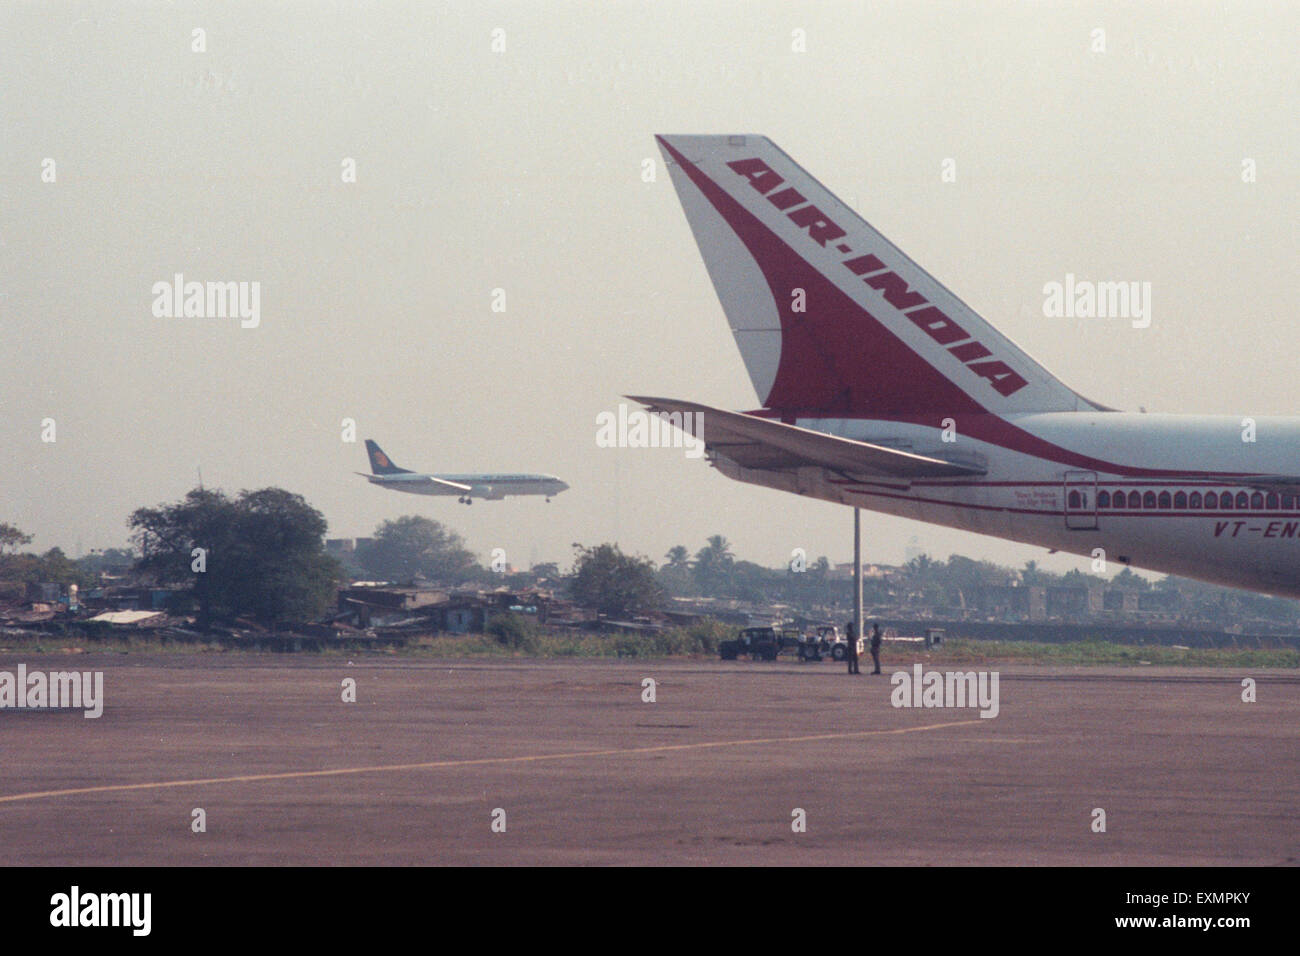 Avion d'Air India tarmac de l'aéroport d'aérodrome Bombay Mumbai maharashtra Inde Banque D'Images